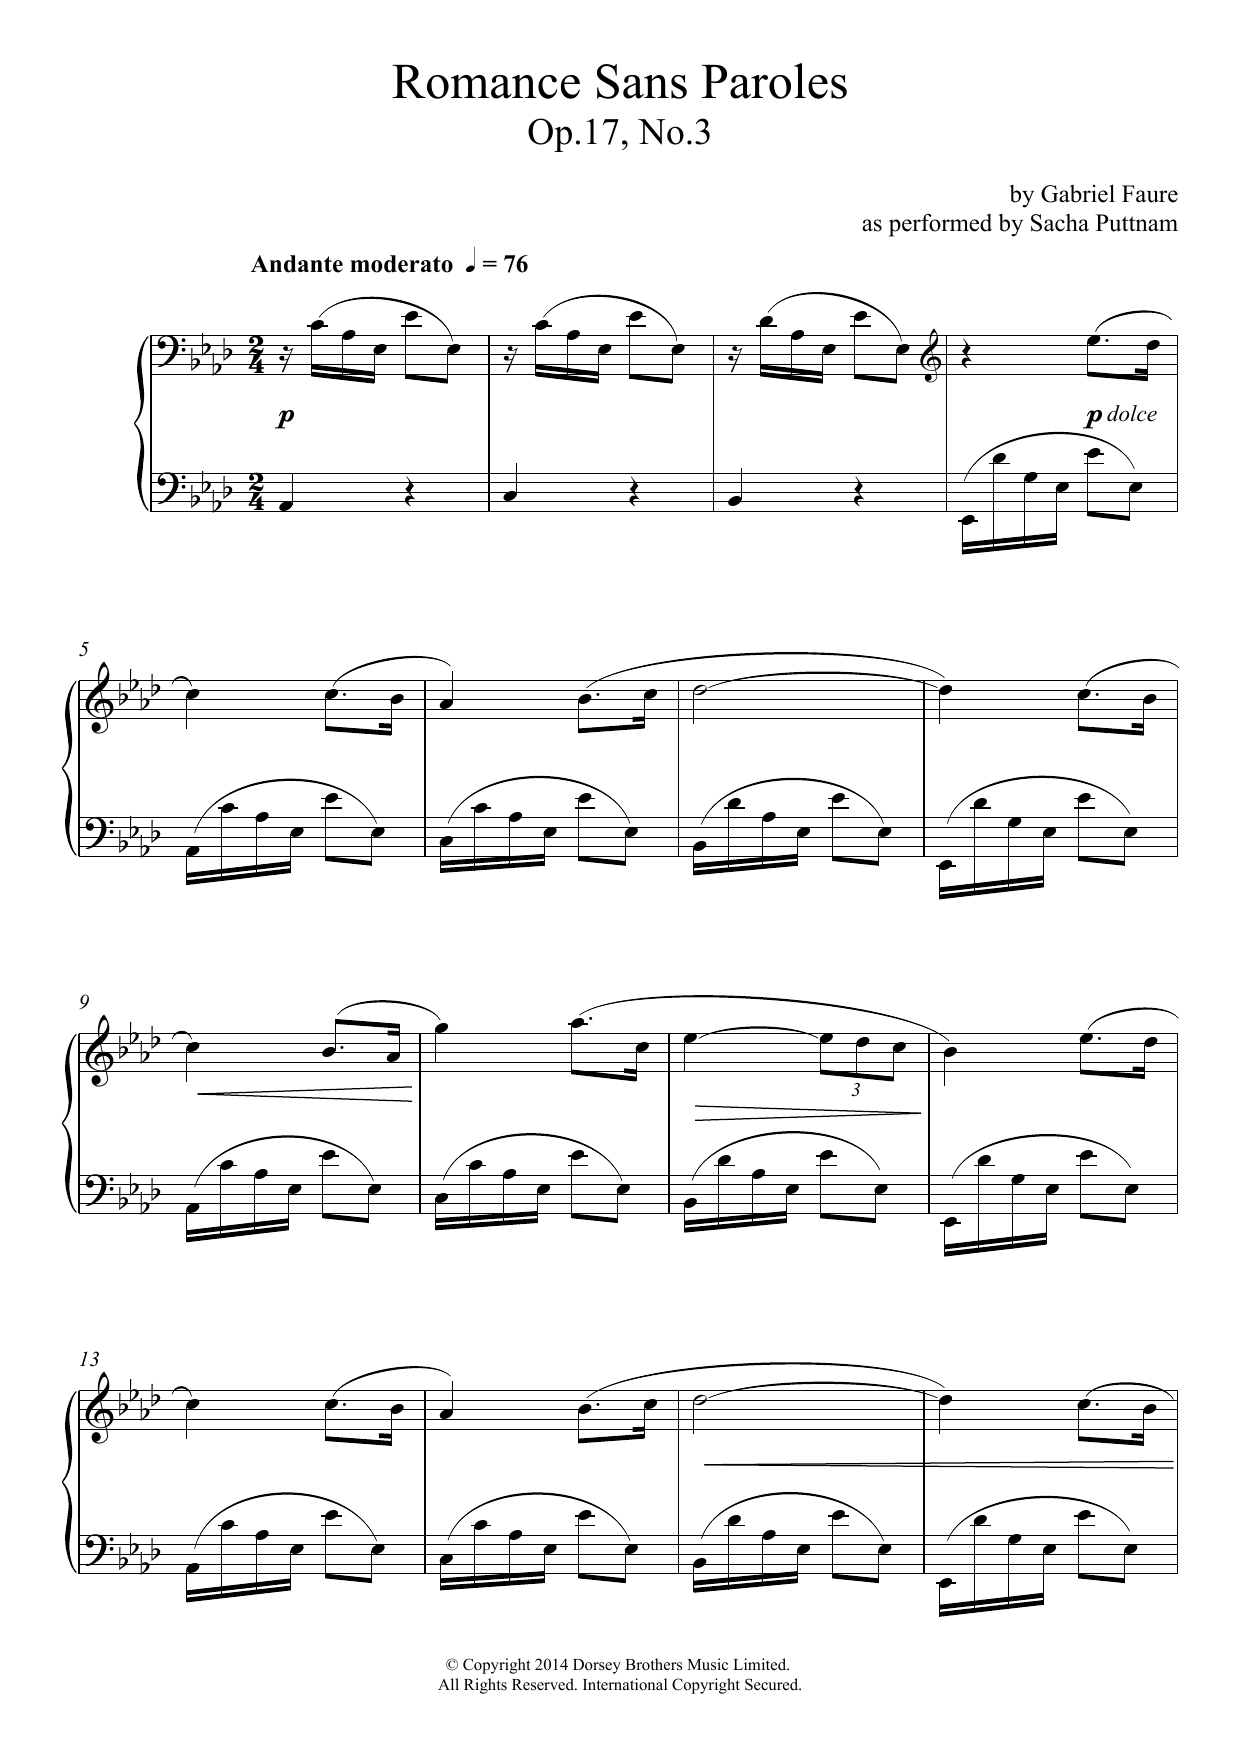 Gabriel Fauré Romance Sans Paroles Op.17, No.3 (as performed by Sacha Puttnam) Sheet Music Notes & Chords for Piano - Download or Print PDF